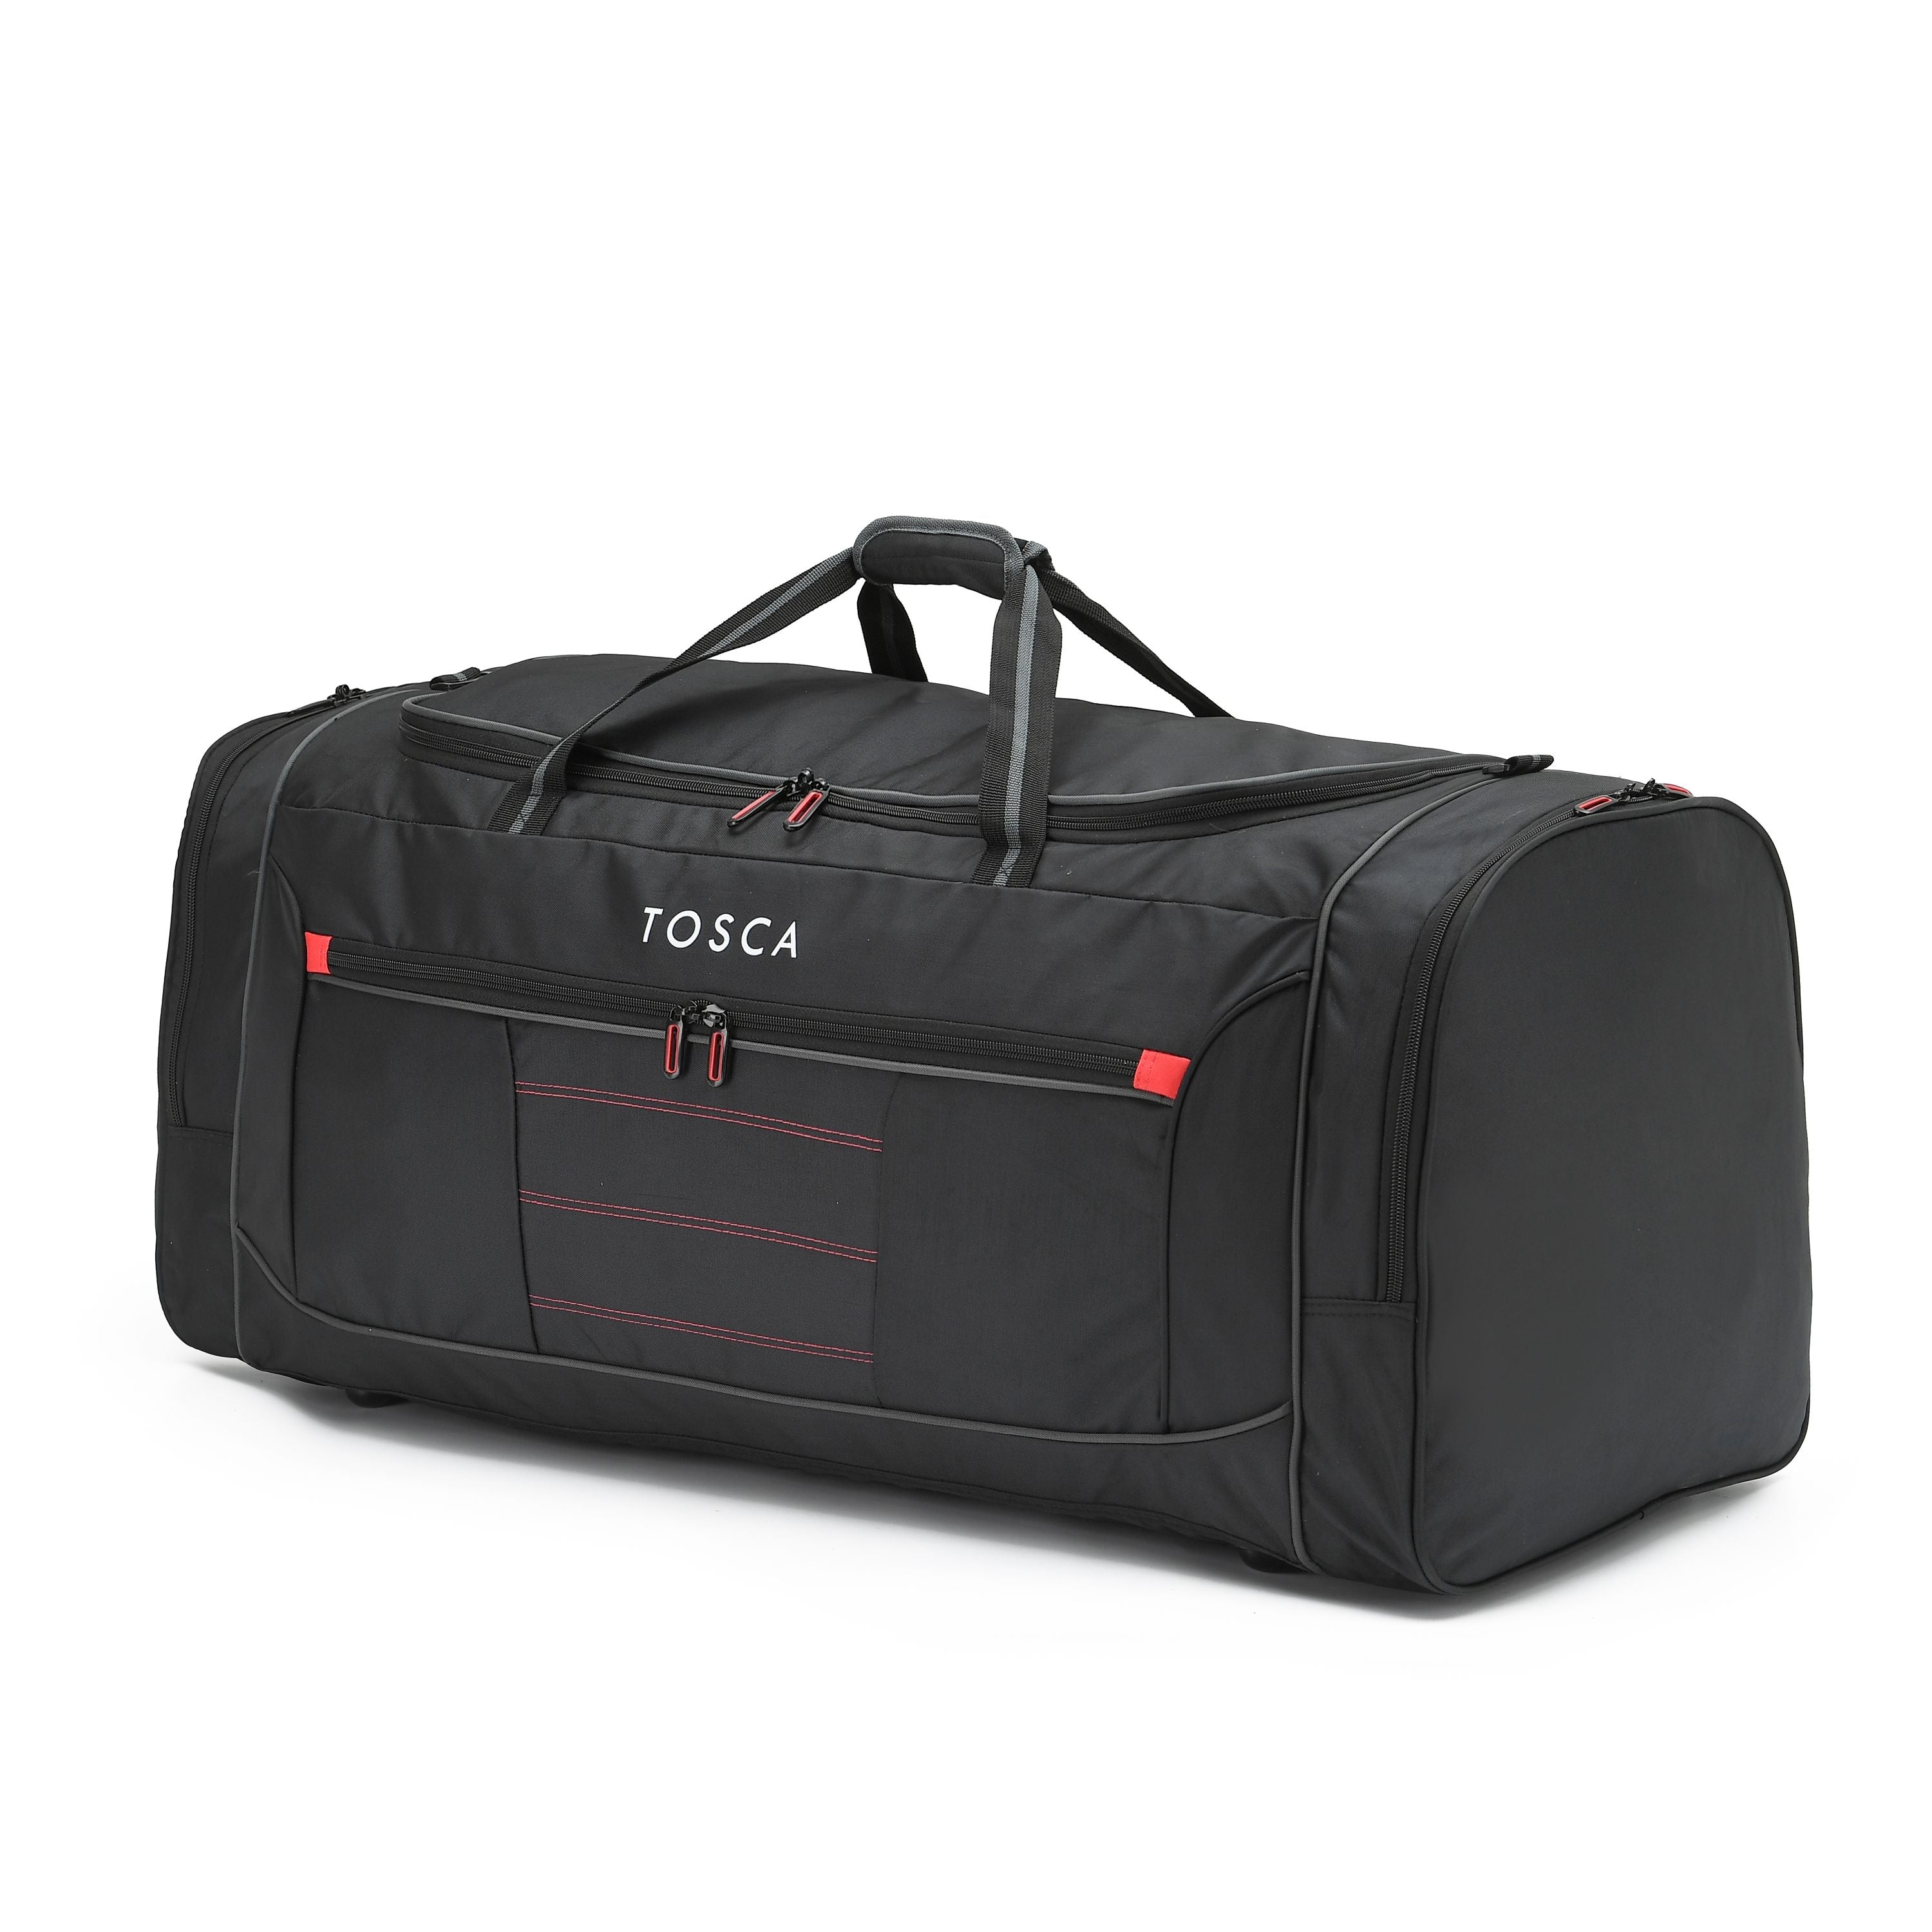 Tosca - TCA794J 90cm Jumbo Duffle Bag - Black/Red - 0